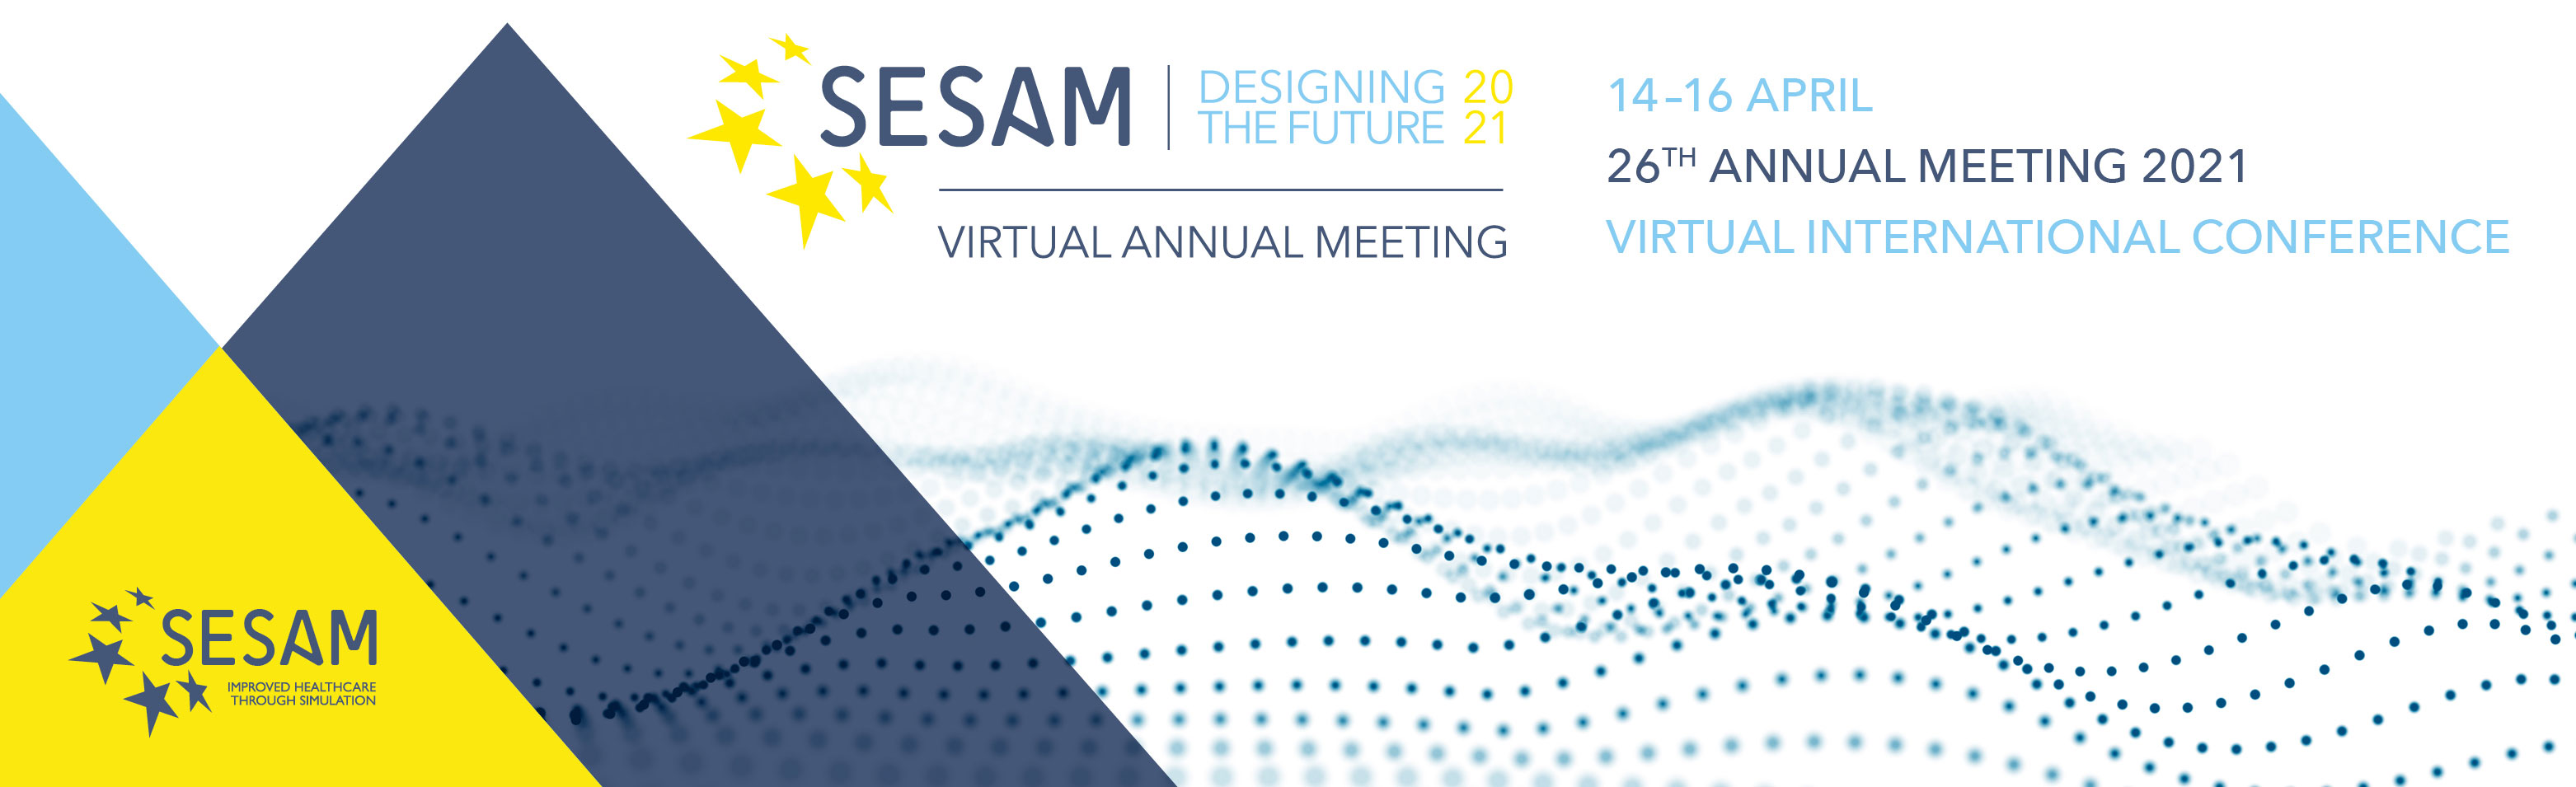 SESAM Virtual Annual Meeting 2021